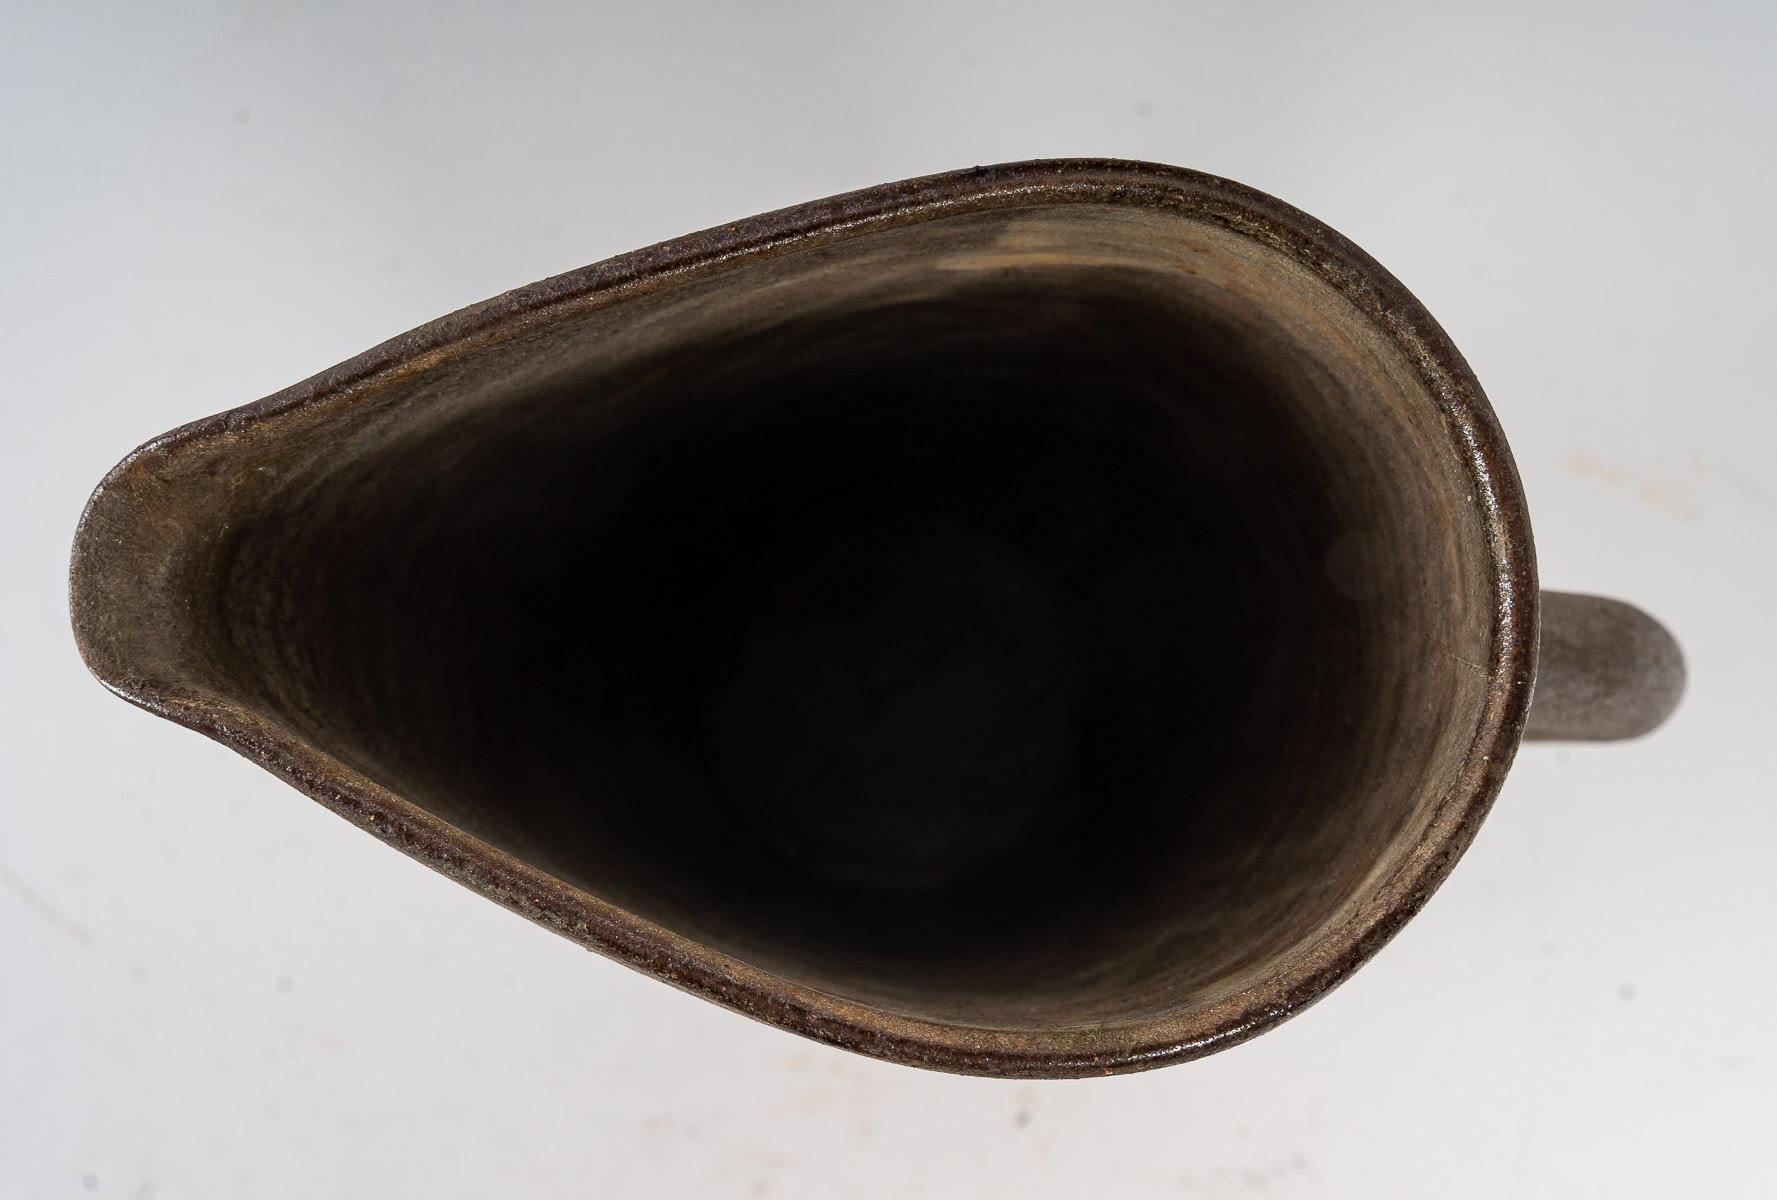 Ceramic pitcher by Alexandre Kostandd

Ceramic of Biot, pitcher by Alexandre Kostandd, 1950-1960.

Dimensions: H: 21cm, W: 14cm, D: 7cm.